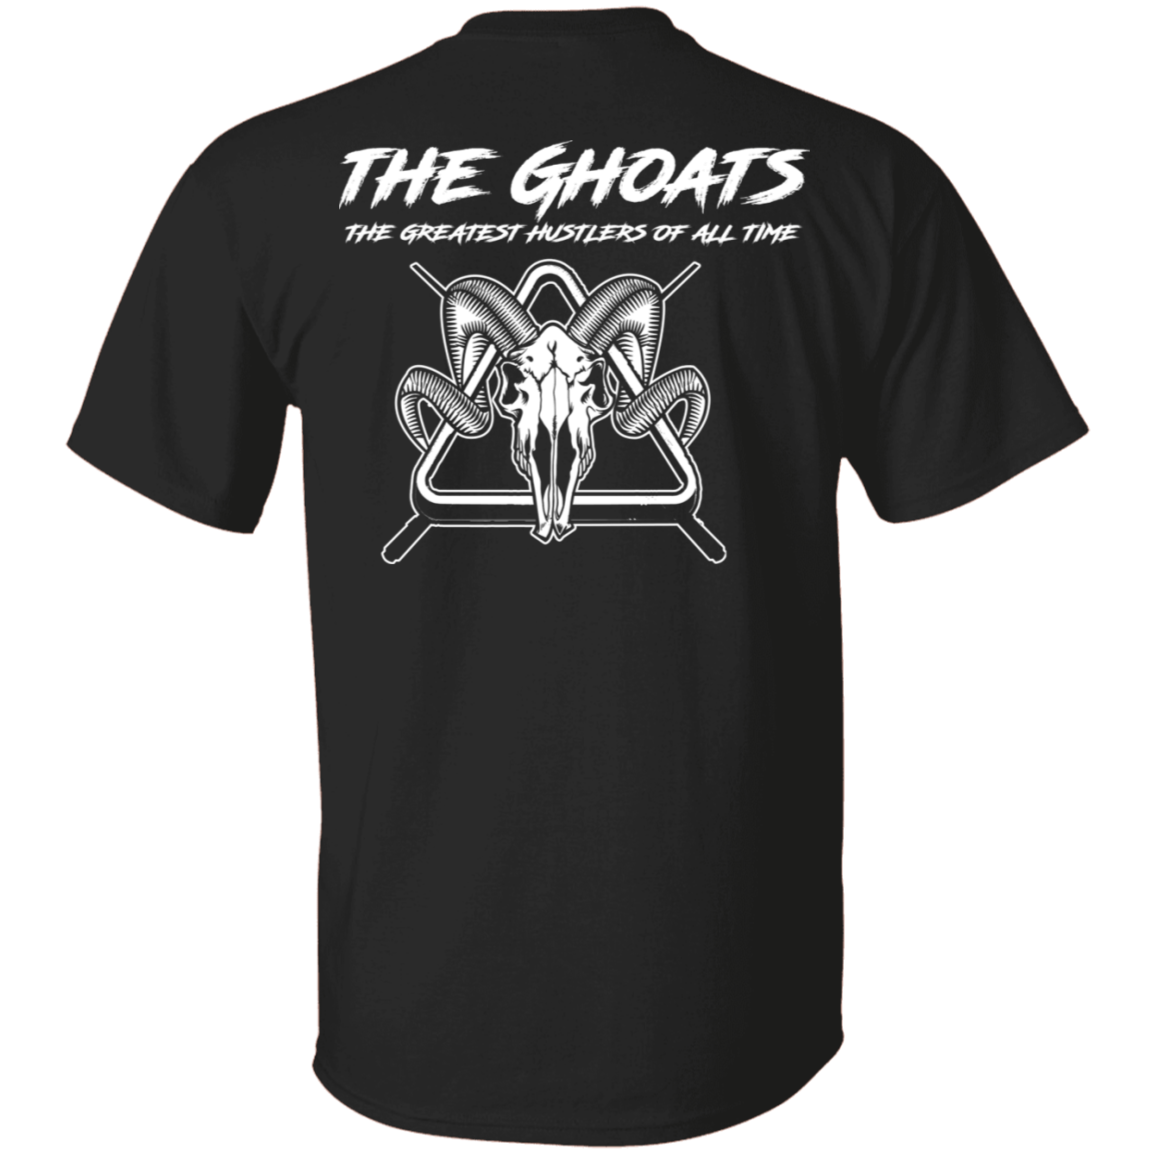 The GHOATS Custom Design #1. Active Shooter. Basic 100% Cotton T-Shirt